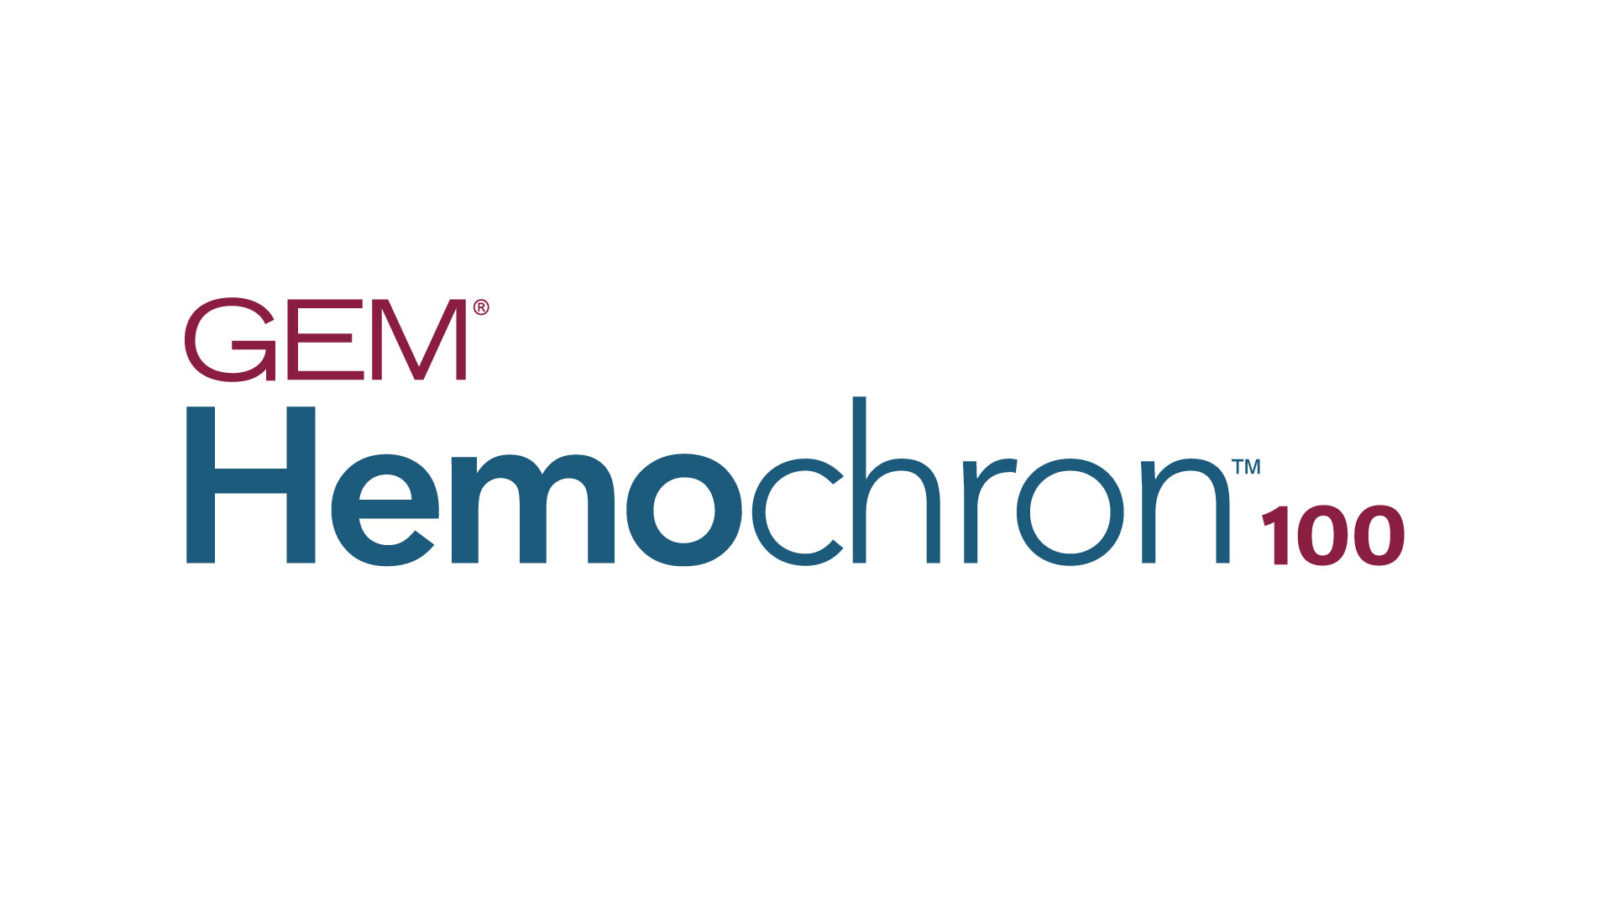 +logo design Hemochron 100